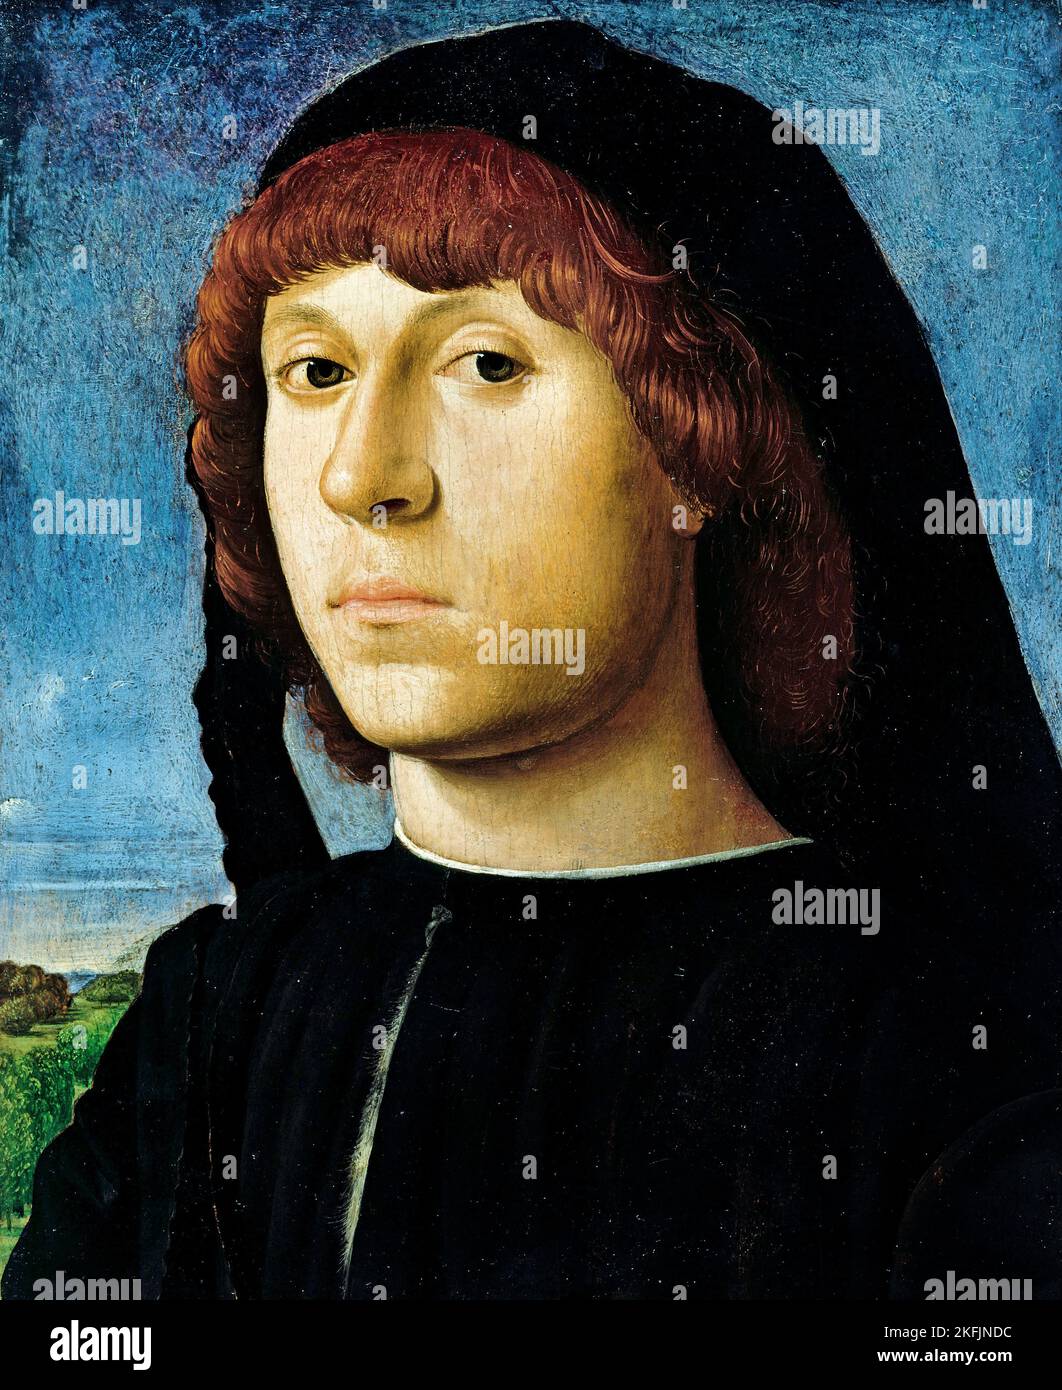 Antonello da Messina; Portrait of a Young Man; 1478; Oil on panel; Gemaldegalerie Alte Meister, Dresden, Germany. Stock Photo